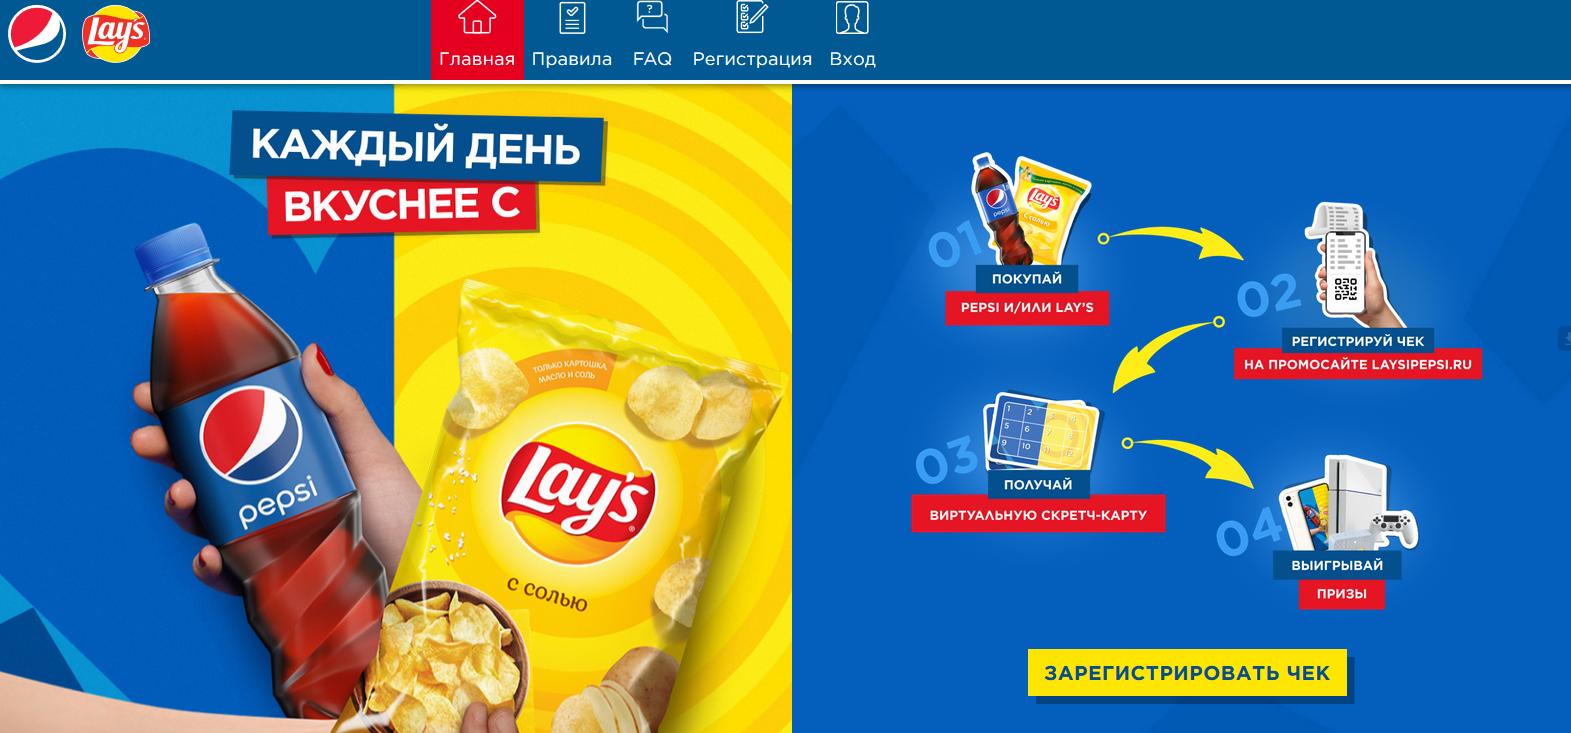 Акция laysipepsi.ru  — Lay’s или Pepsi и др. с 9 октября 2020